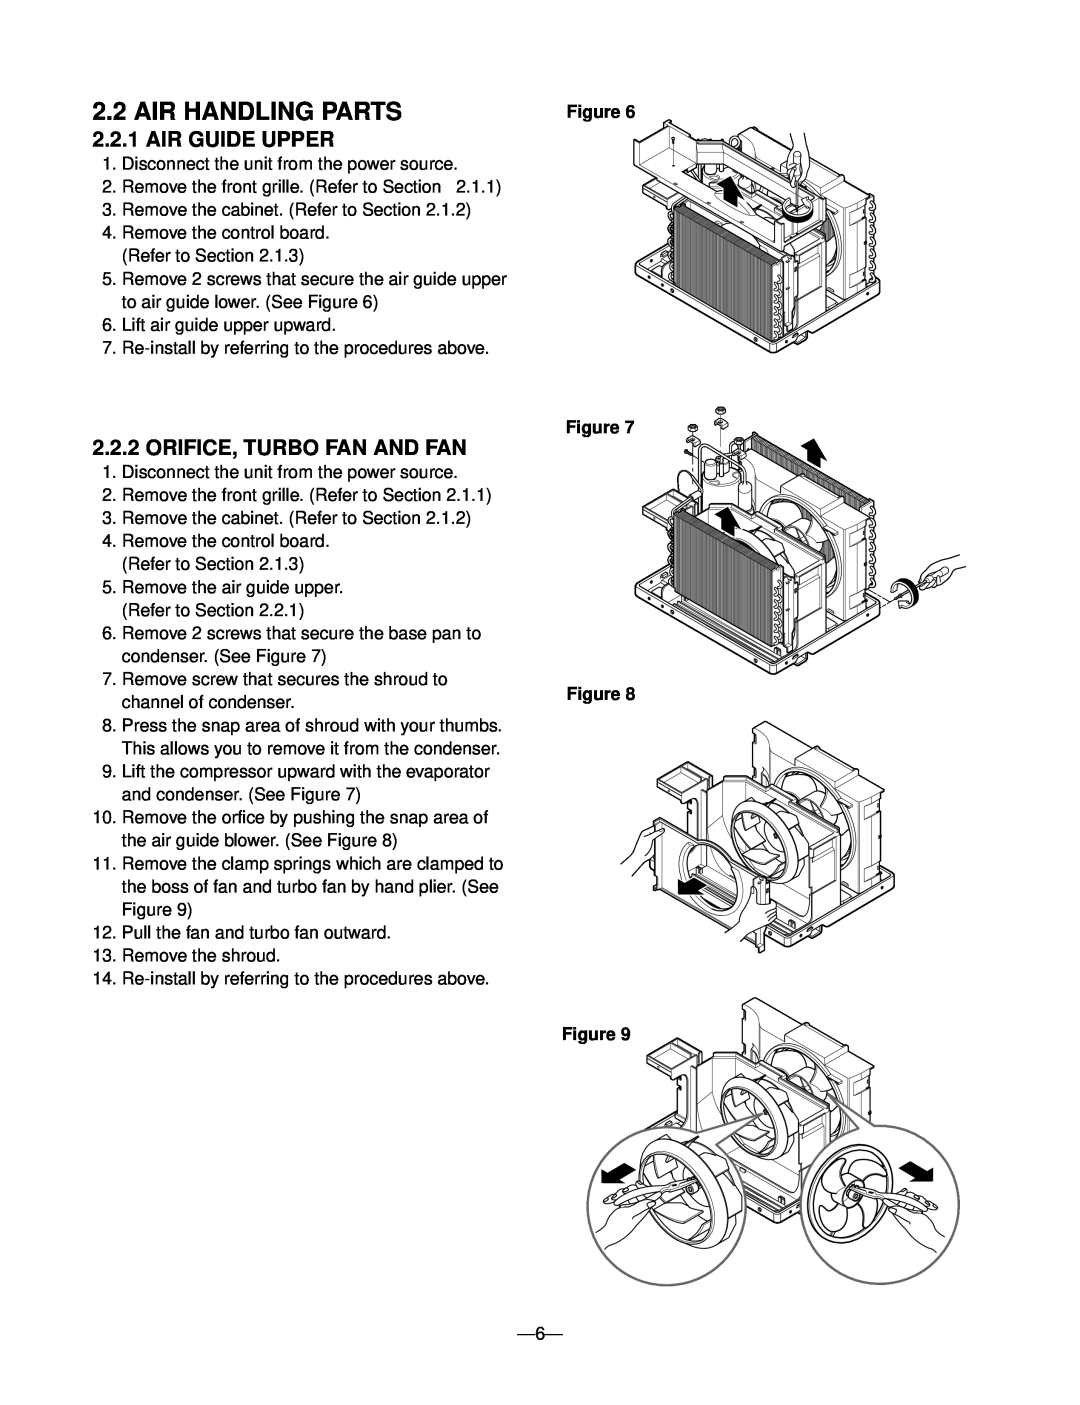 Friedrich KP05A10 KP06A10 Air Handling Parts, Air Guide Upper, Orifice, Turbo Fan And Fan, Figure Figure Figure Figure 